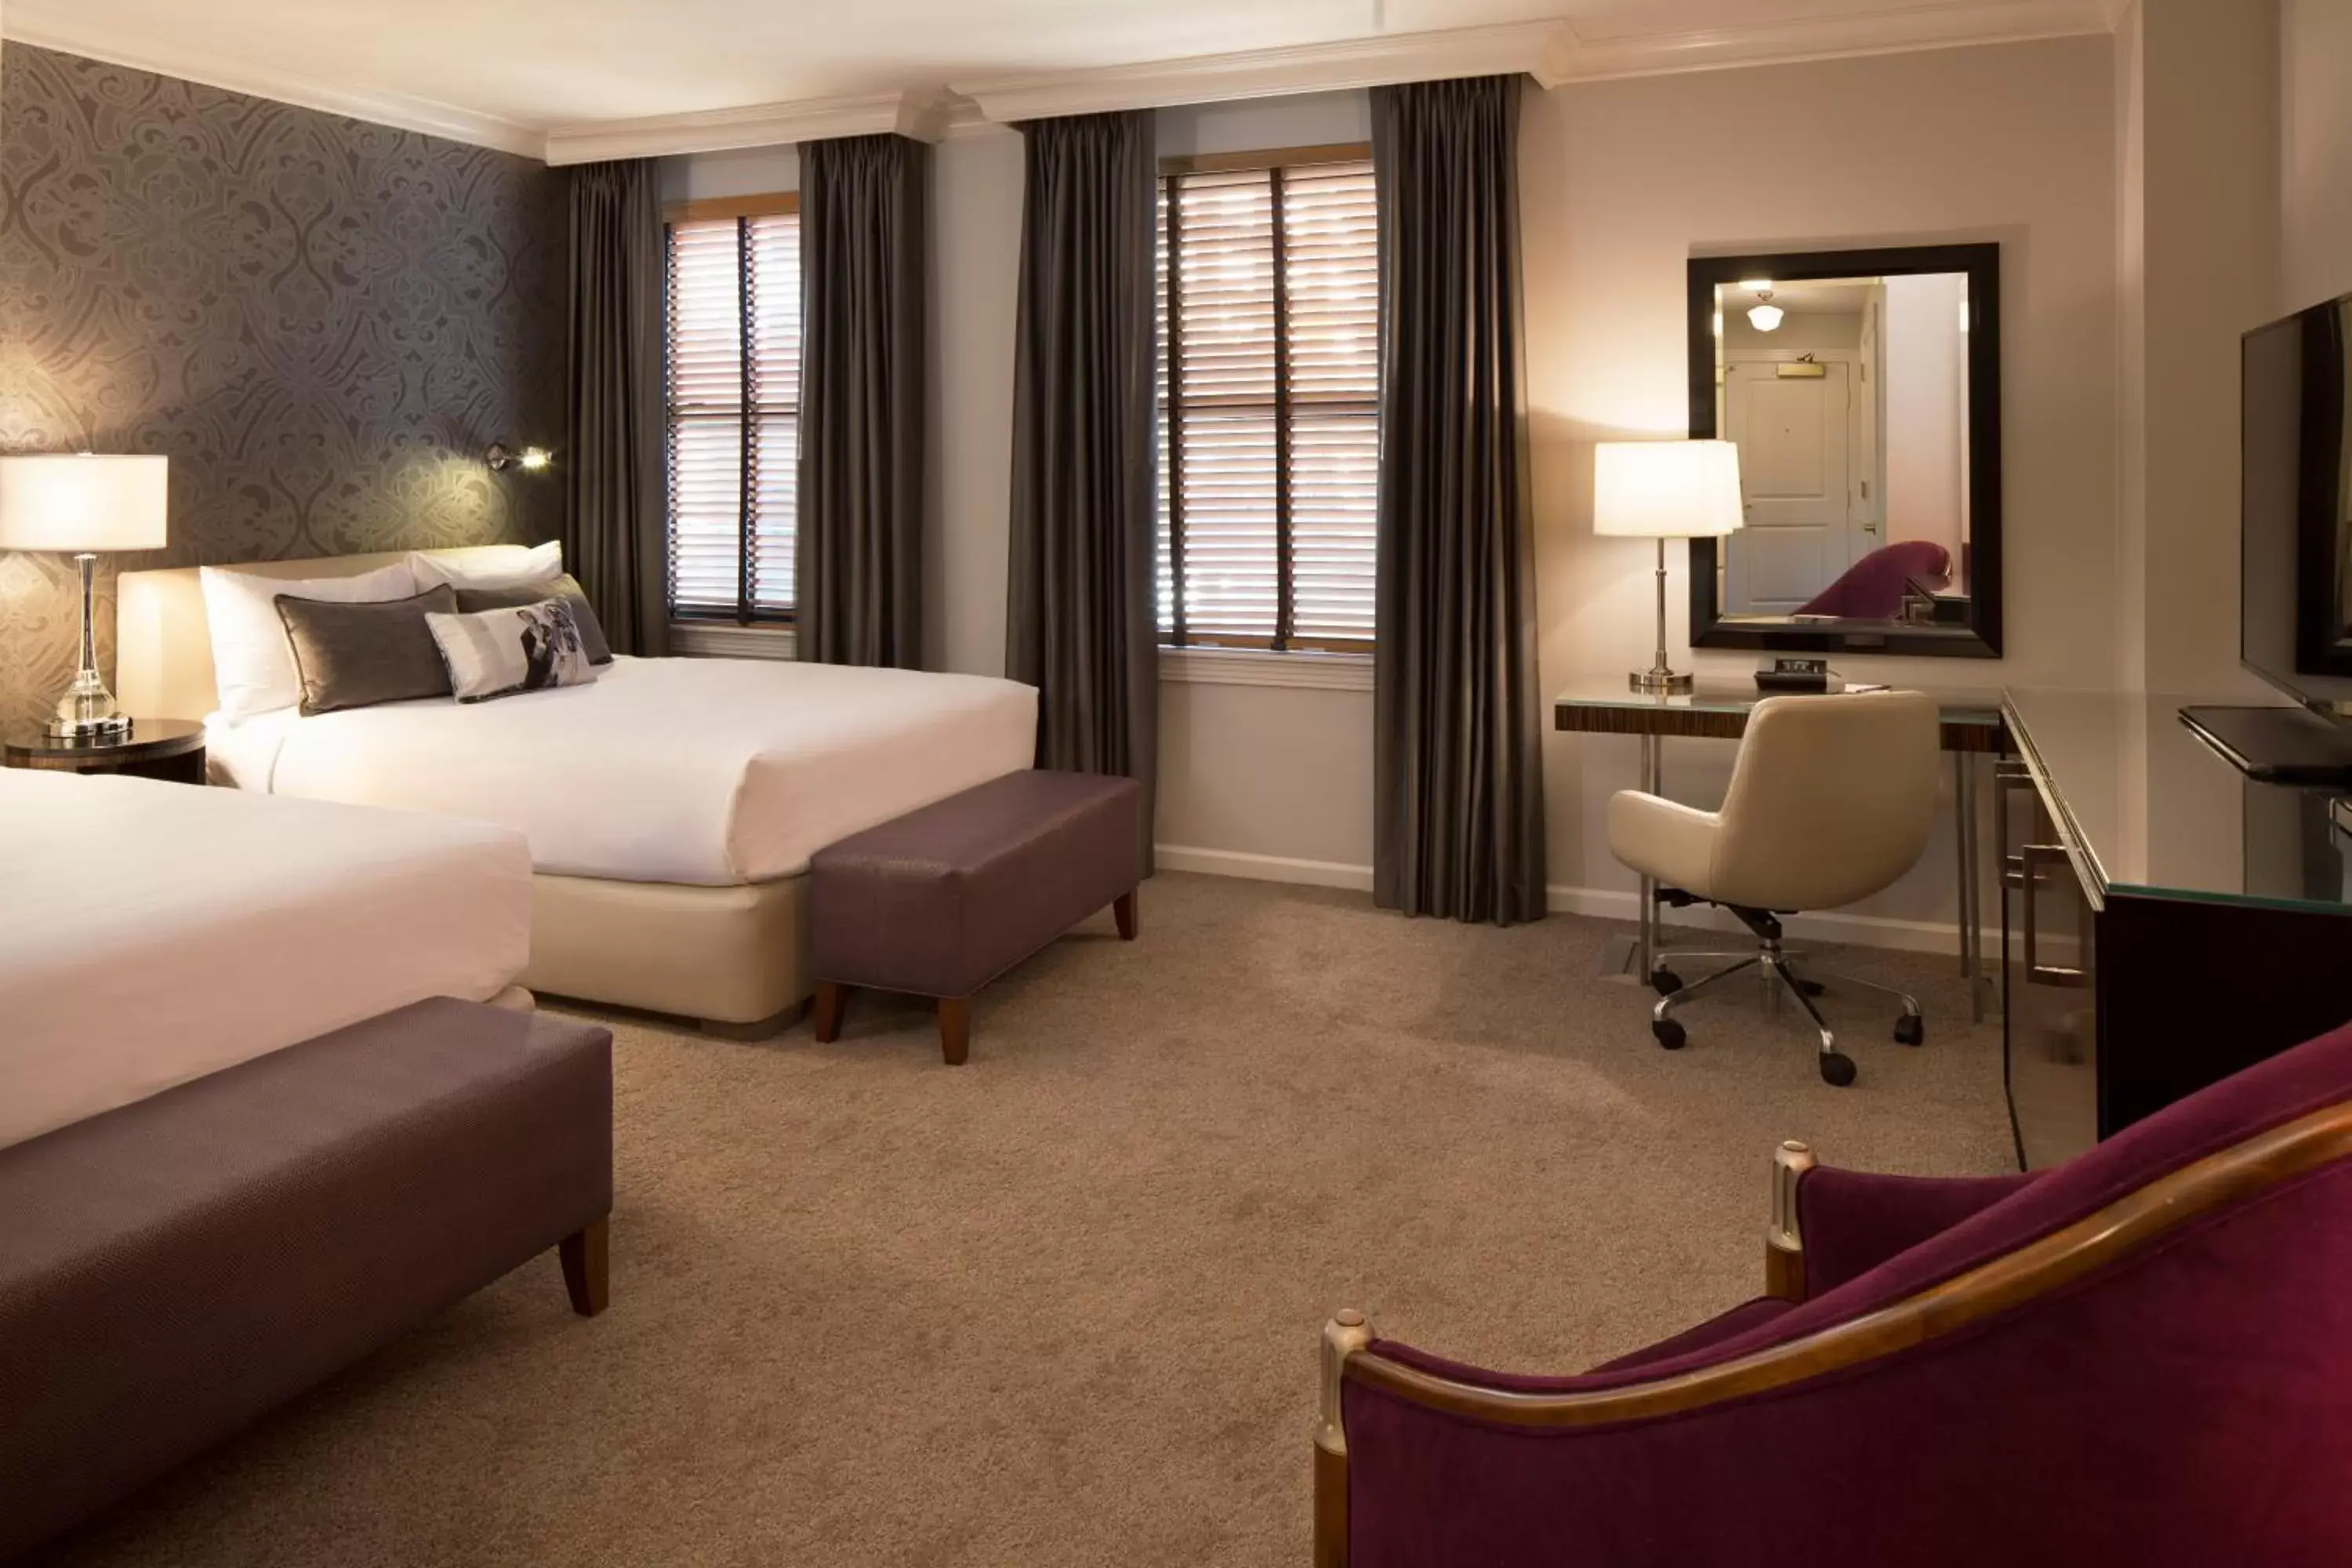 Queen Room with Two Queen Beds in Hotel De Anza, a Destination by Hyatt Hotel